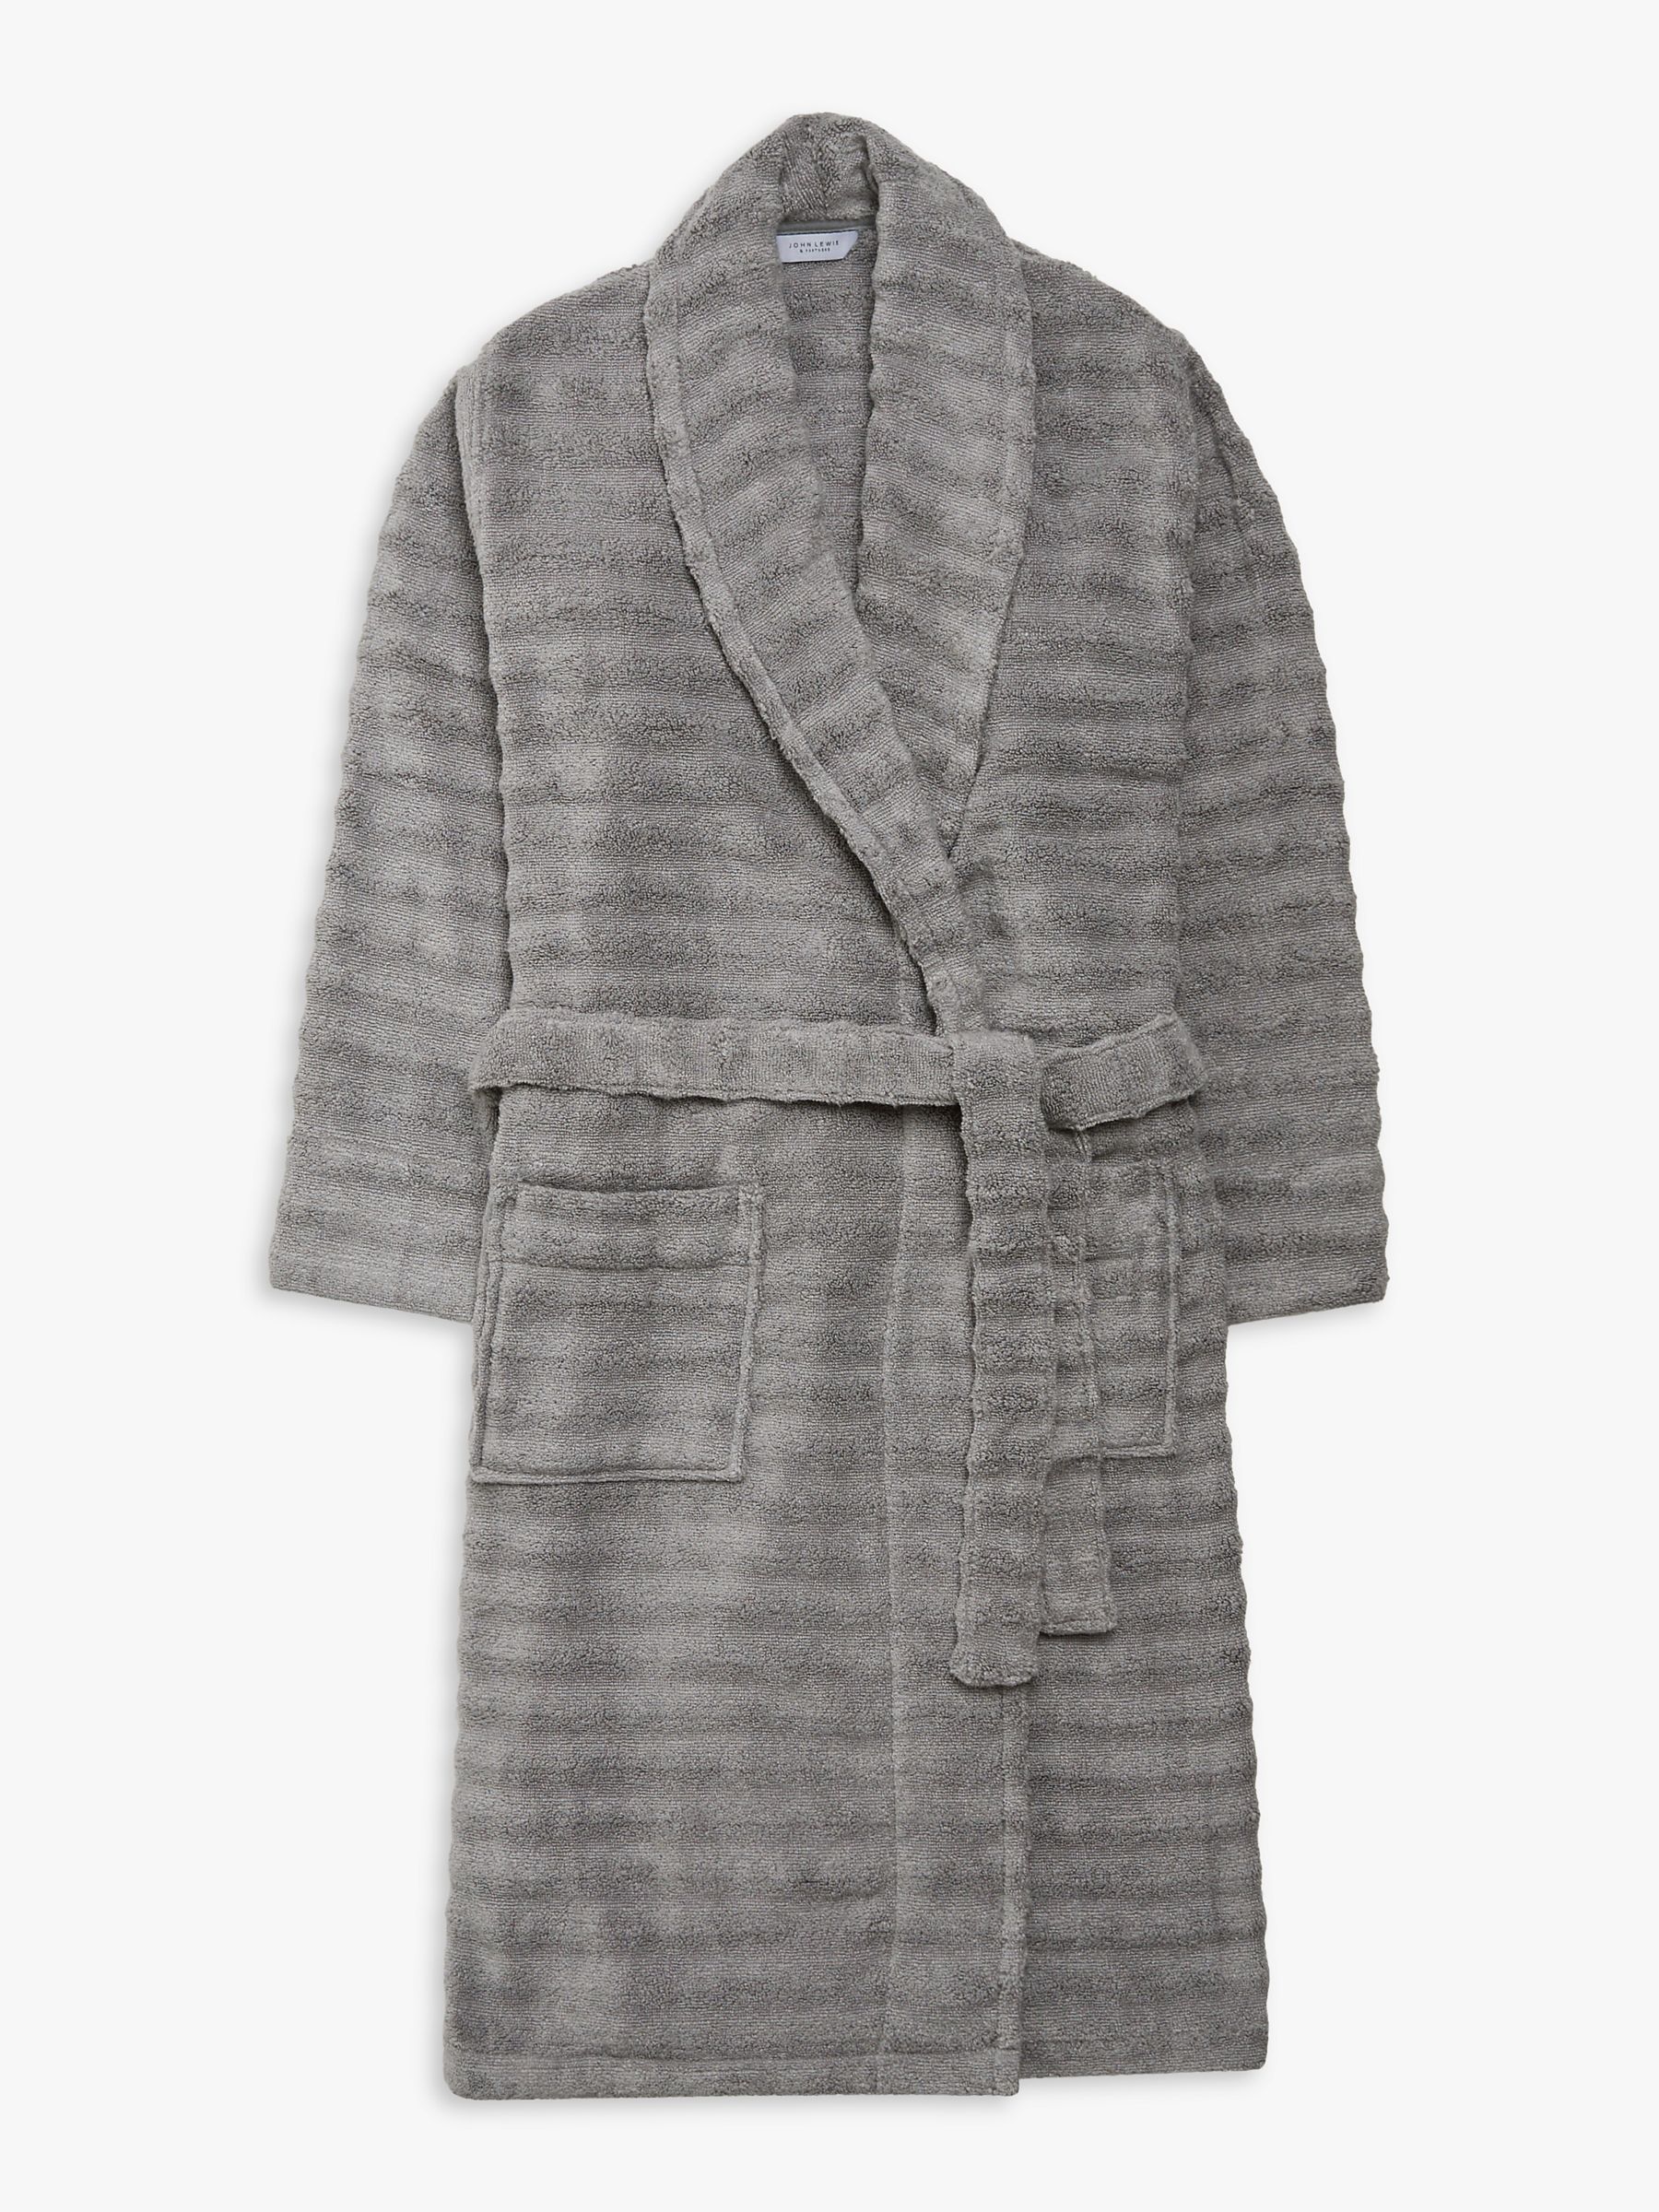 John Lewis & Partners Luxury Spa Unisex Bath Robe, Dove Grey, S-M